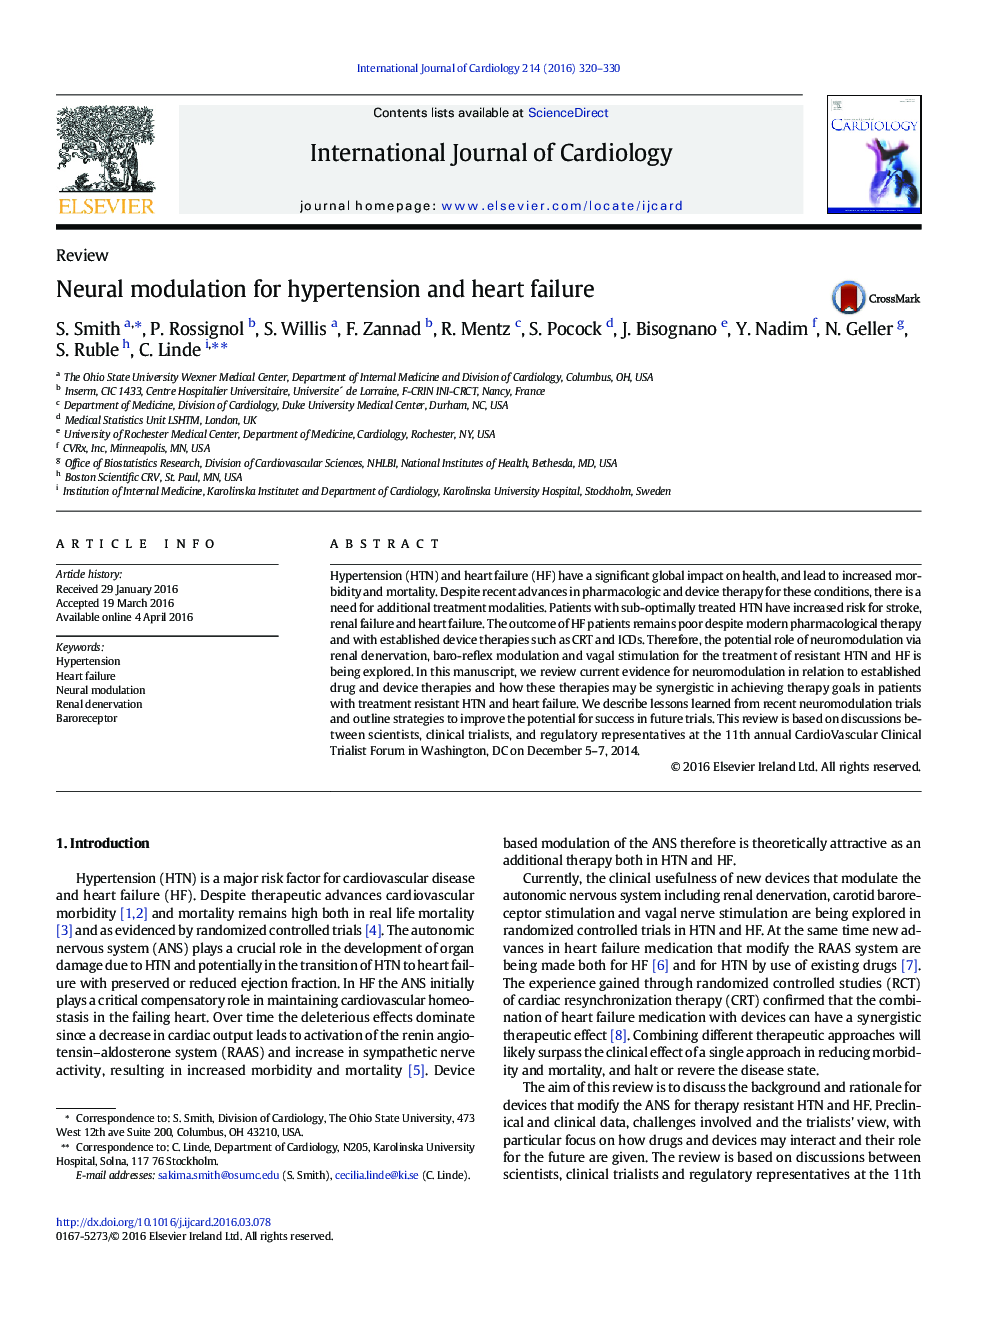 Neural modulation for hypertension and heart failure